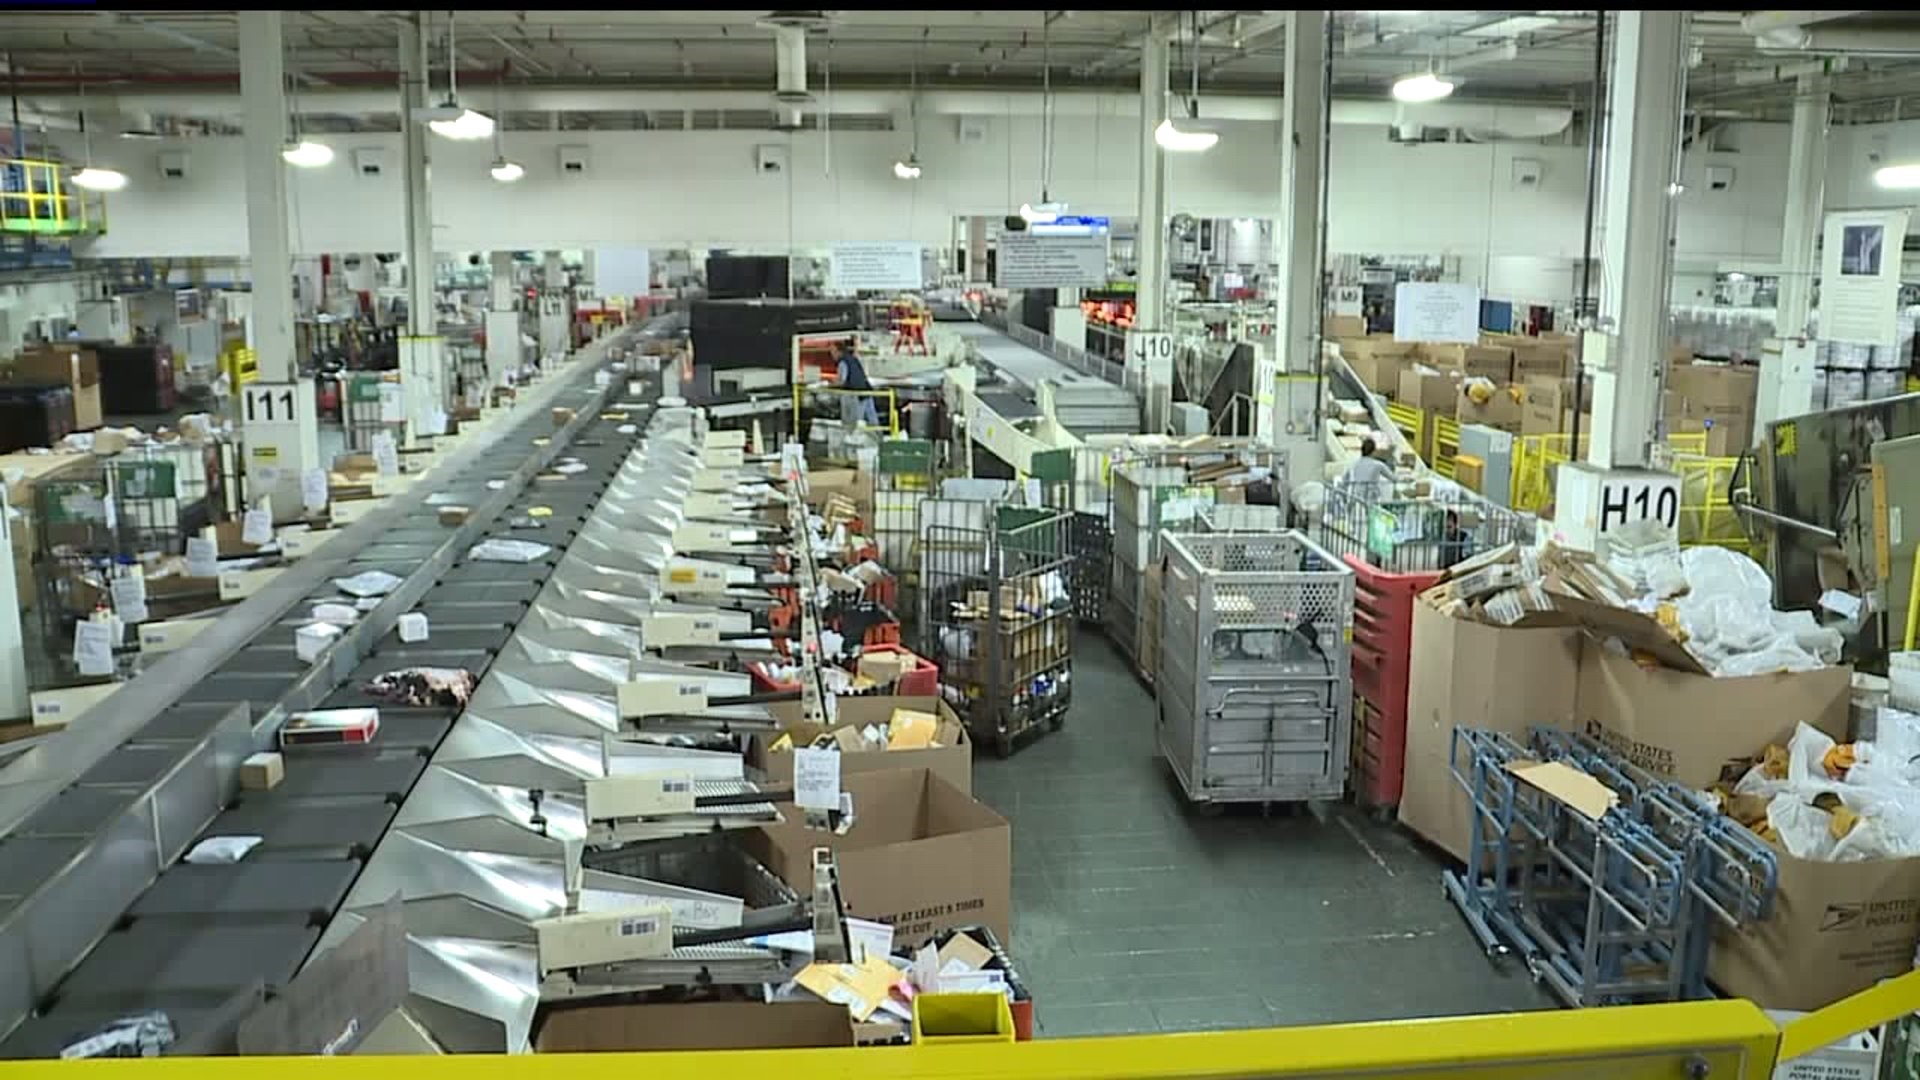 Behind the scenes look at a postal facility